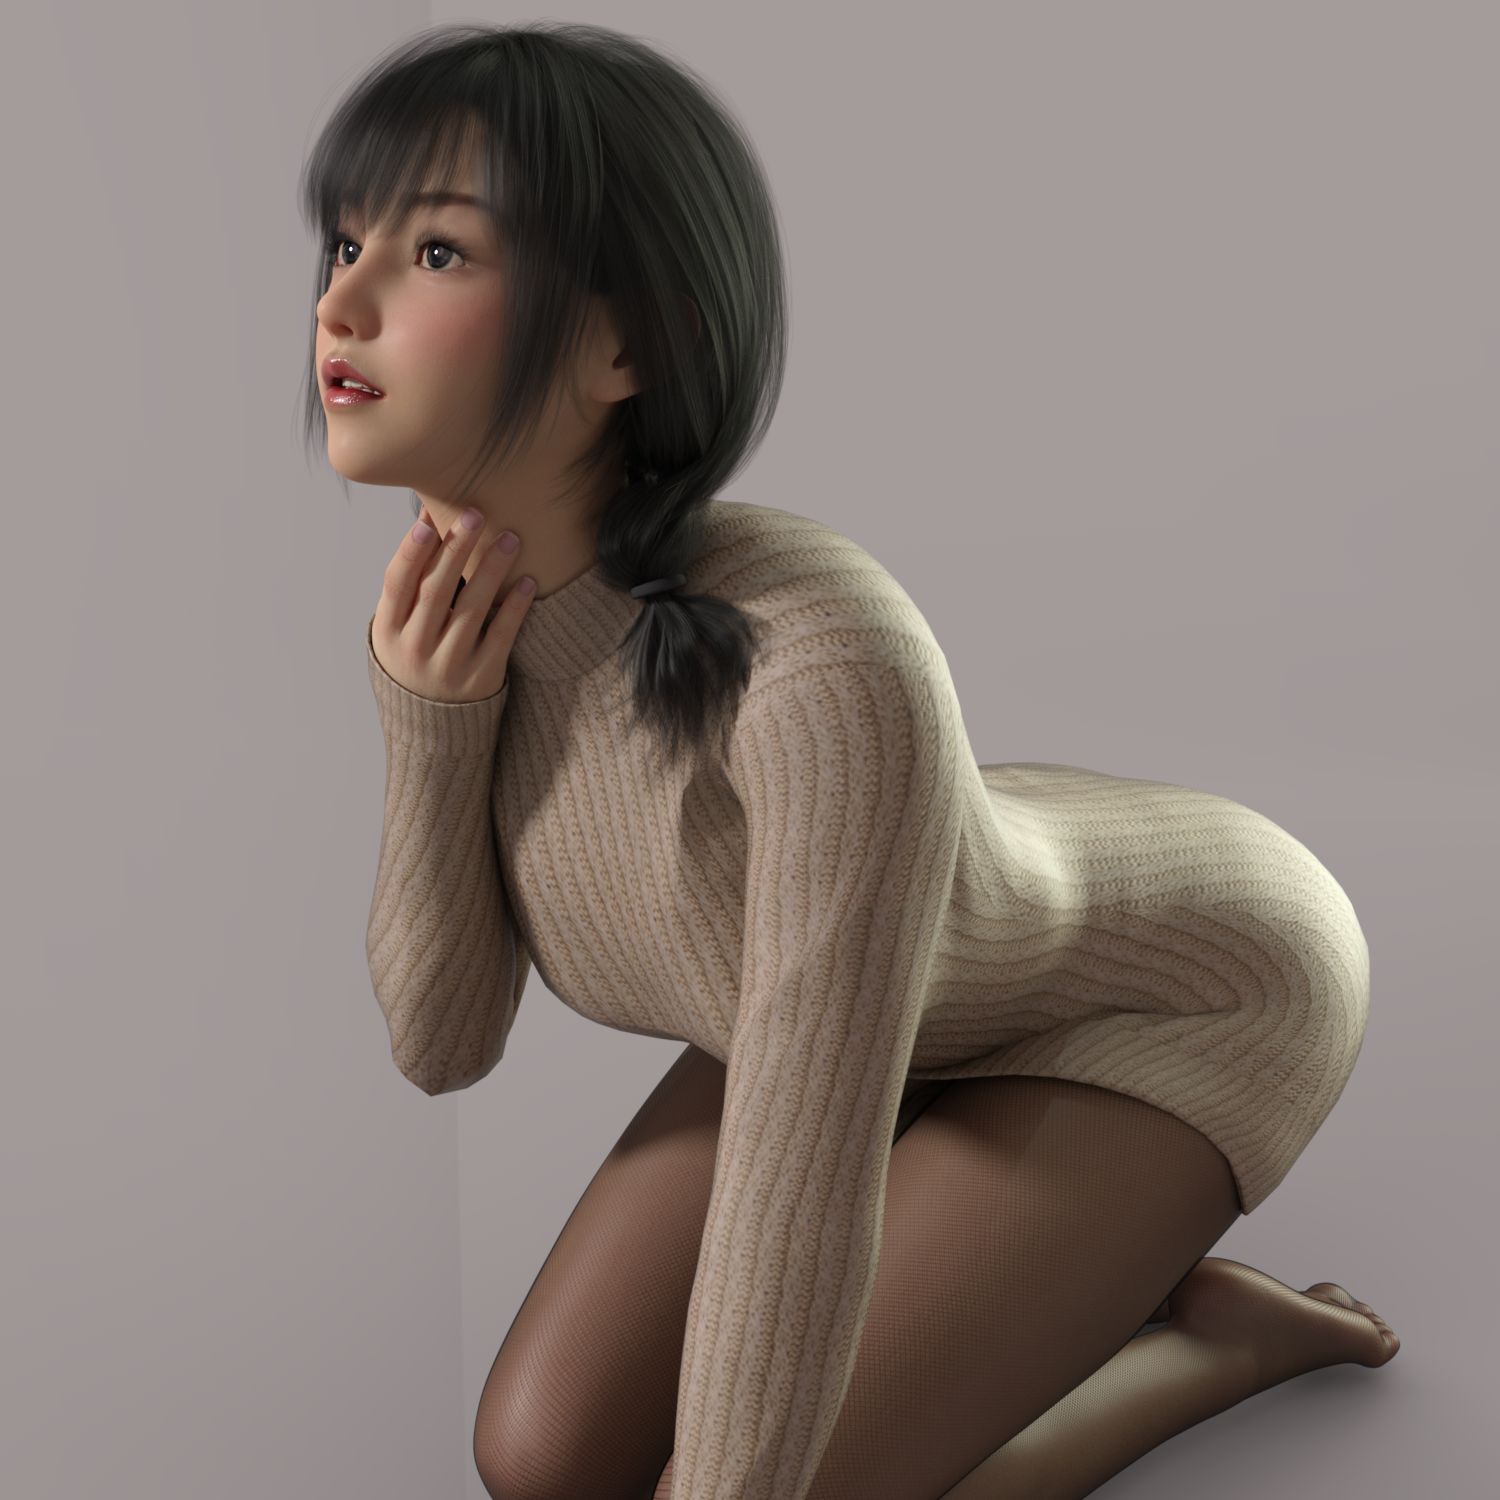 General 1500x1500 Asian women digital art kneeling sweater pantyhose